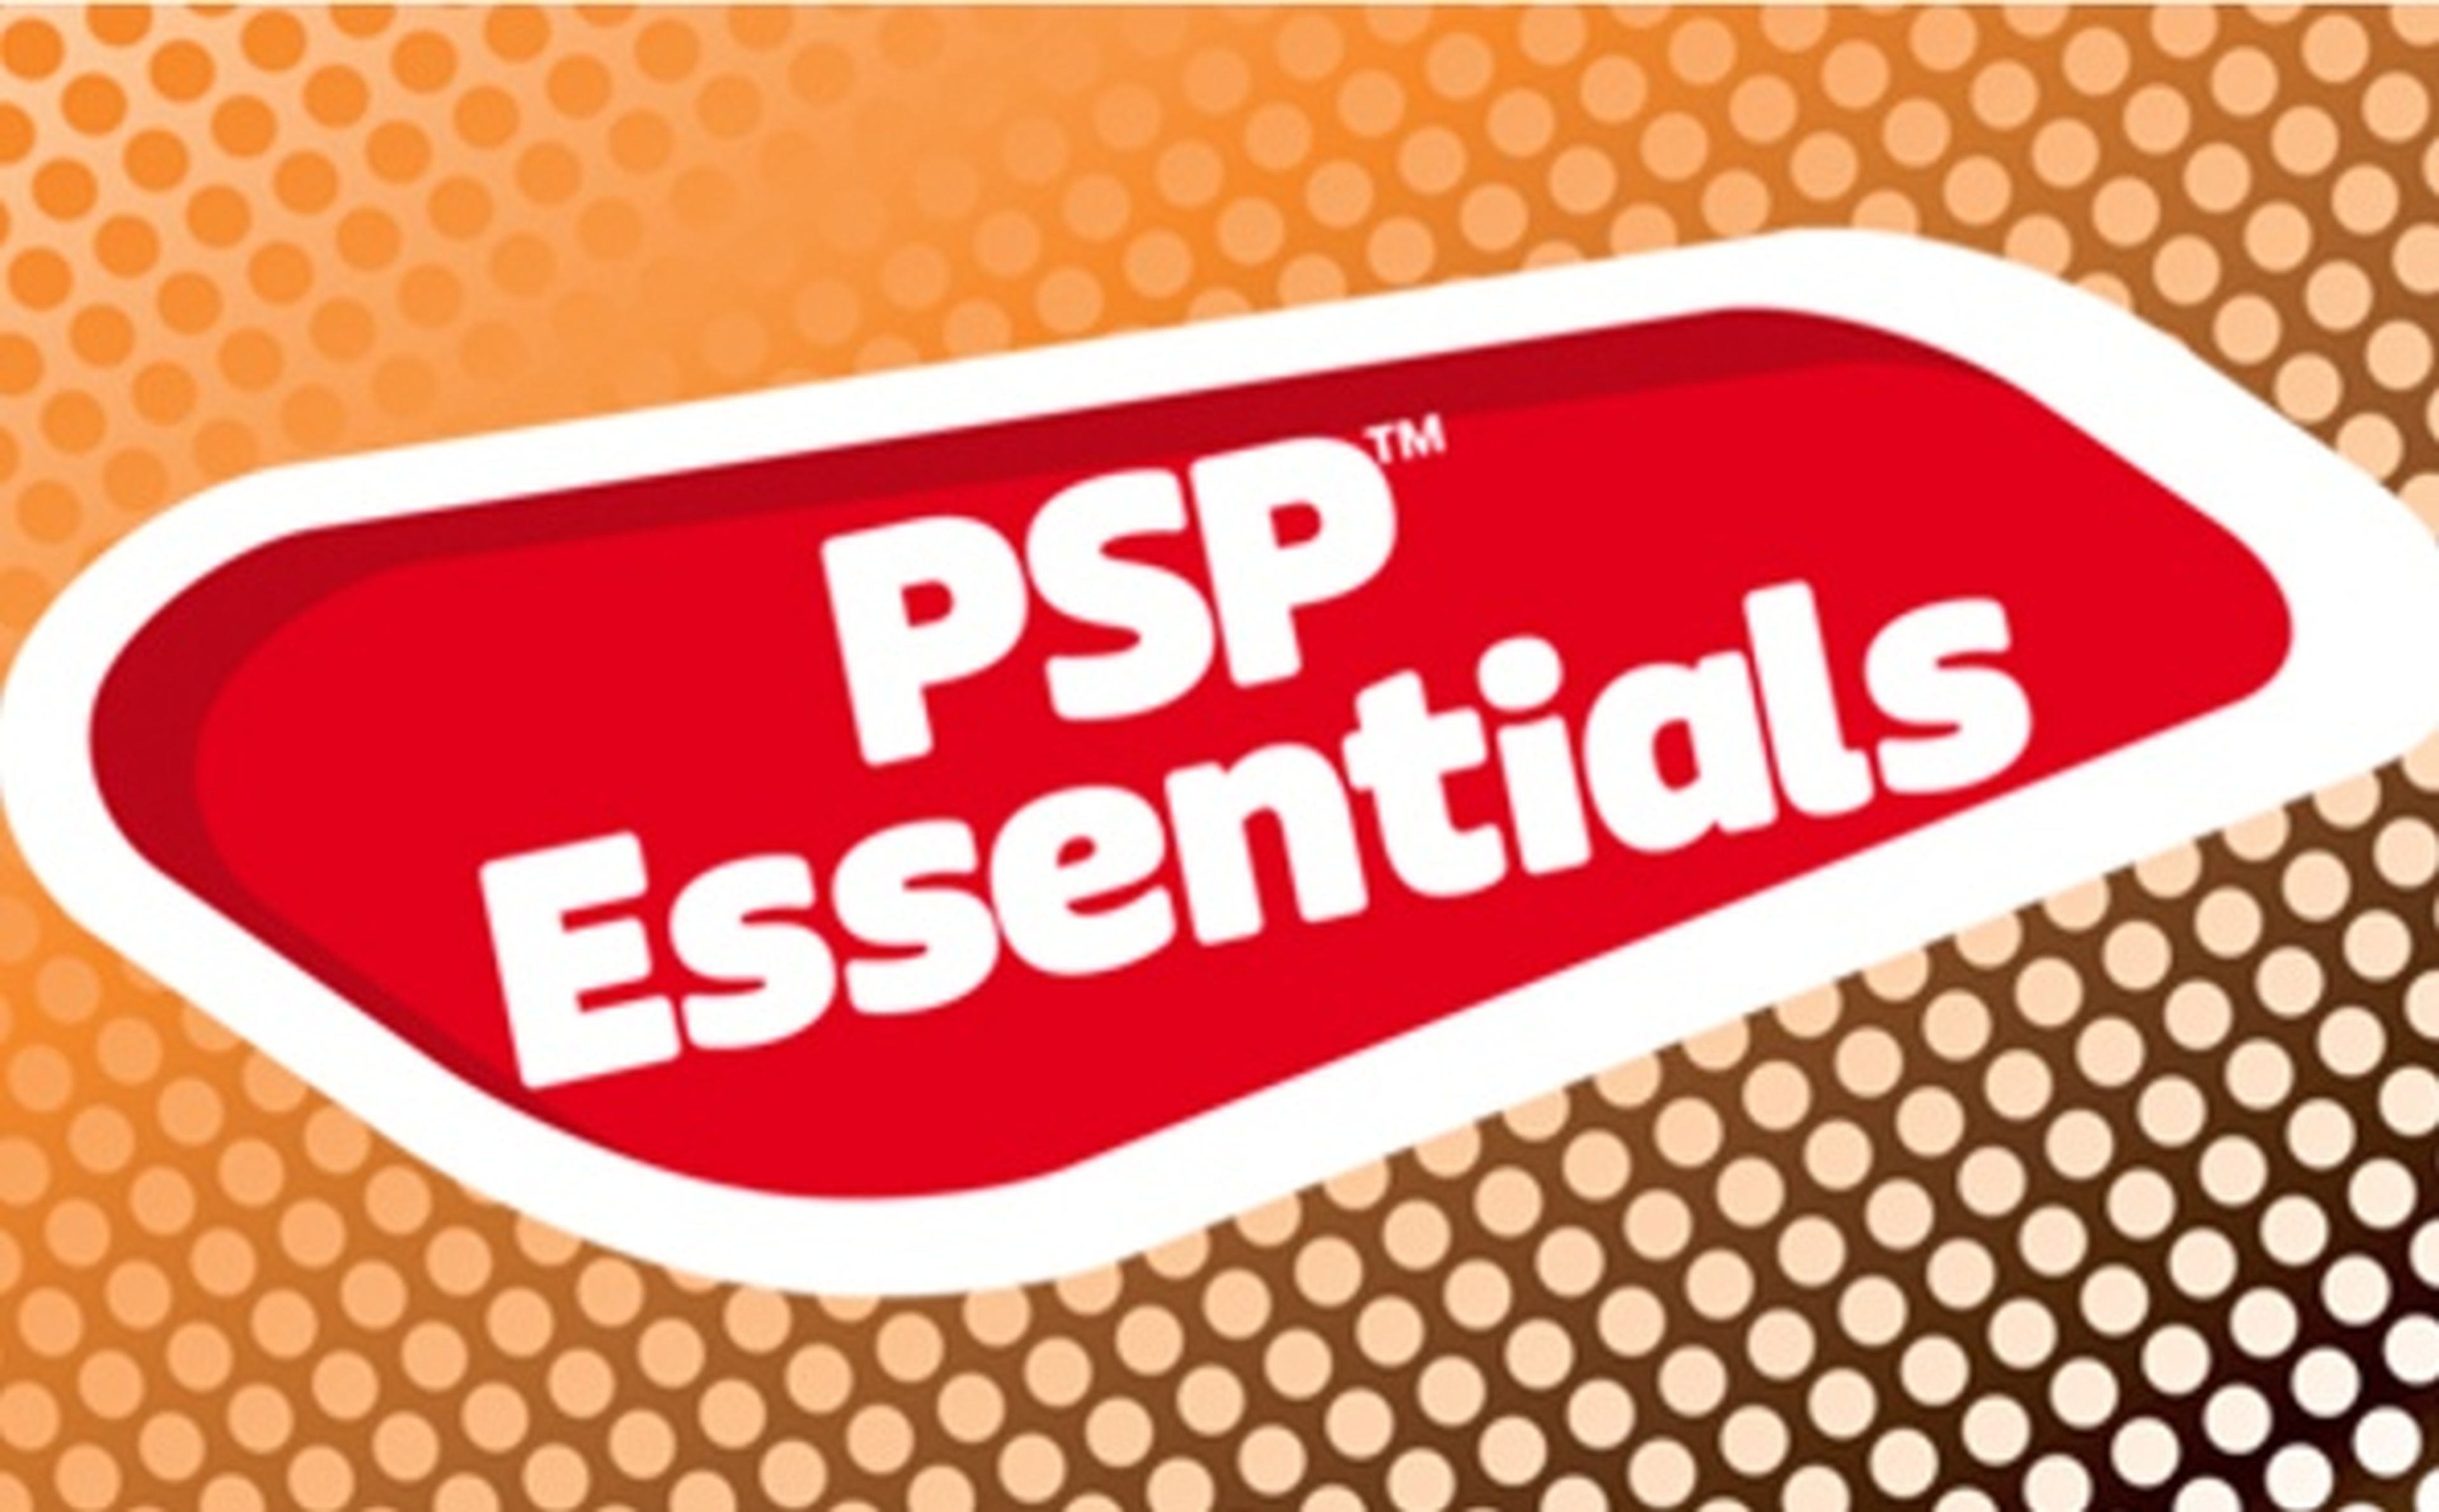 PSP Essentials engrosa sus filas